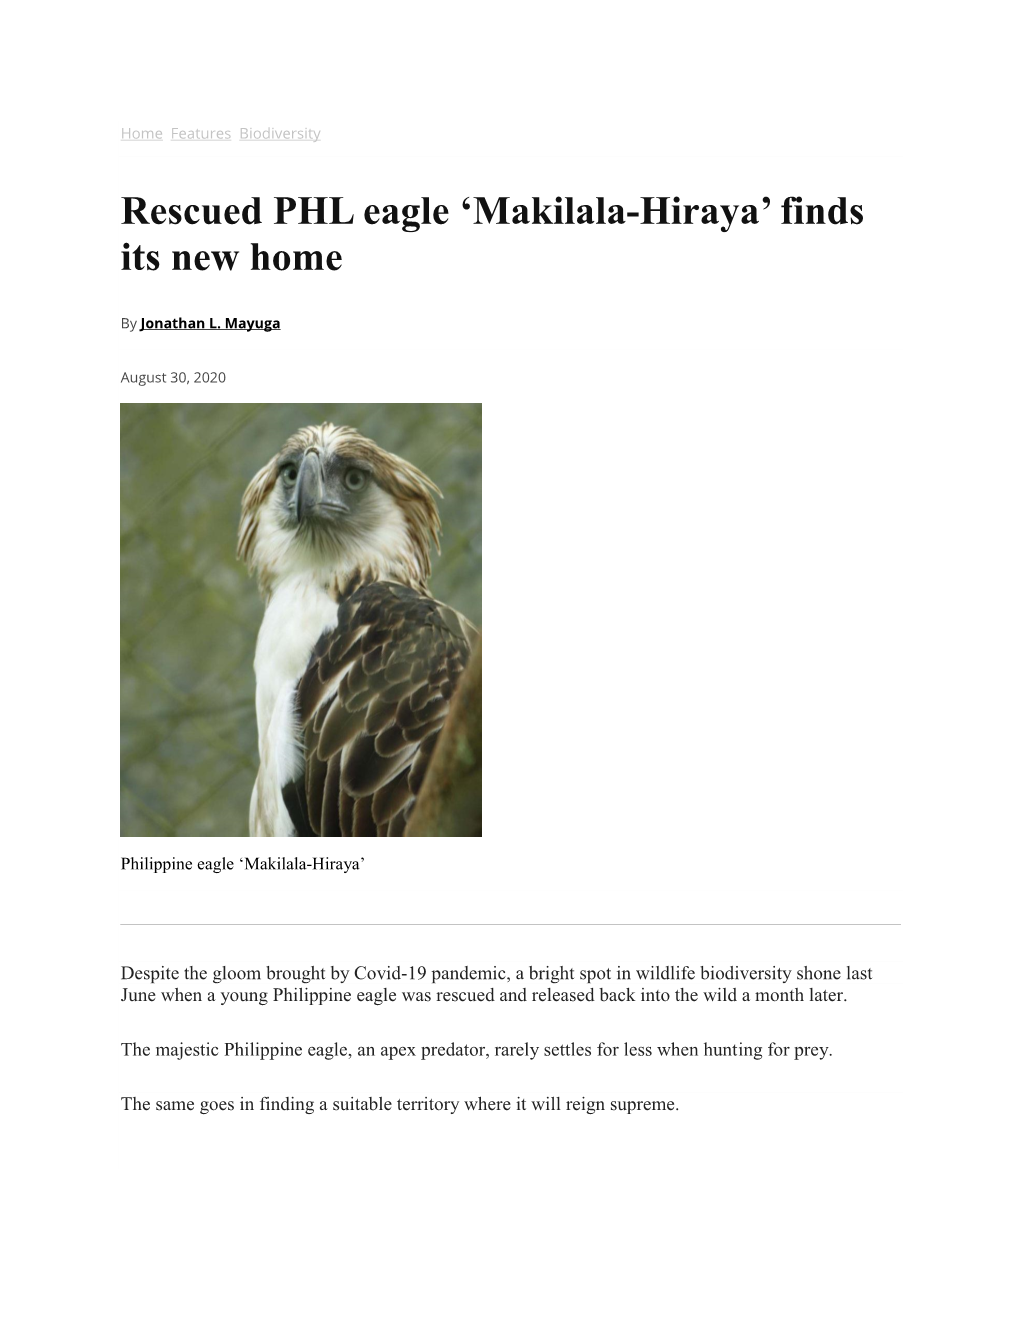 Makilala-Hiraya’ Finds Its New Home